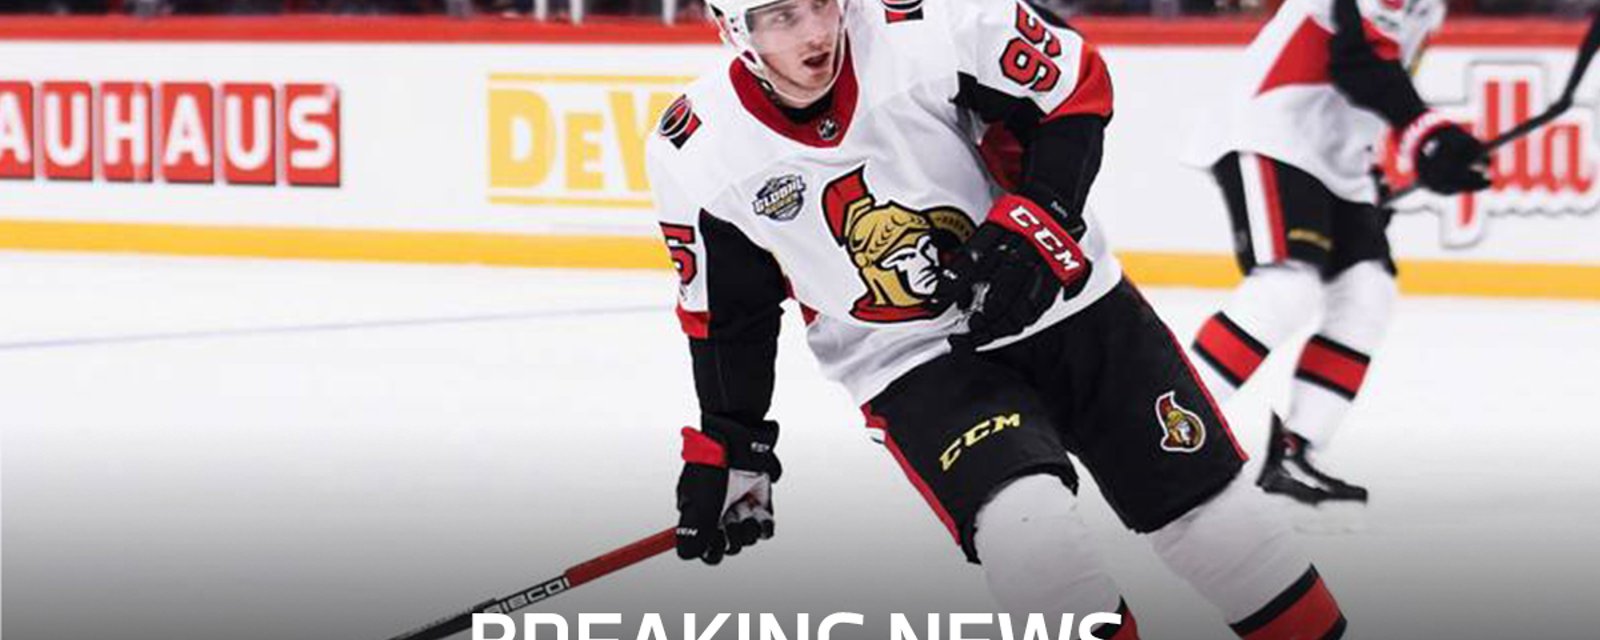 Breaking: Matt Duchene finally scored a goal with the Senators!